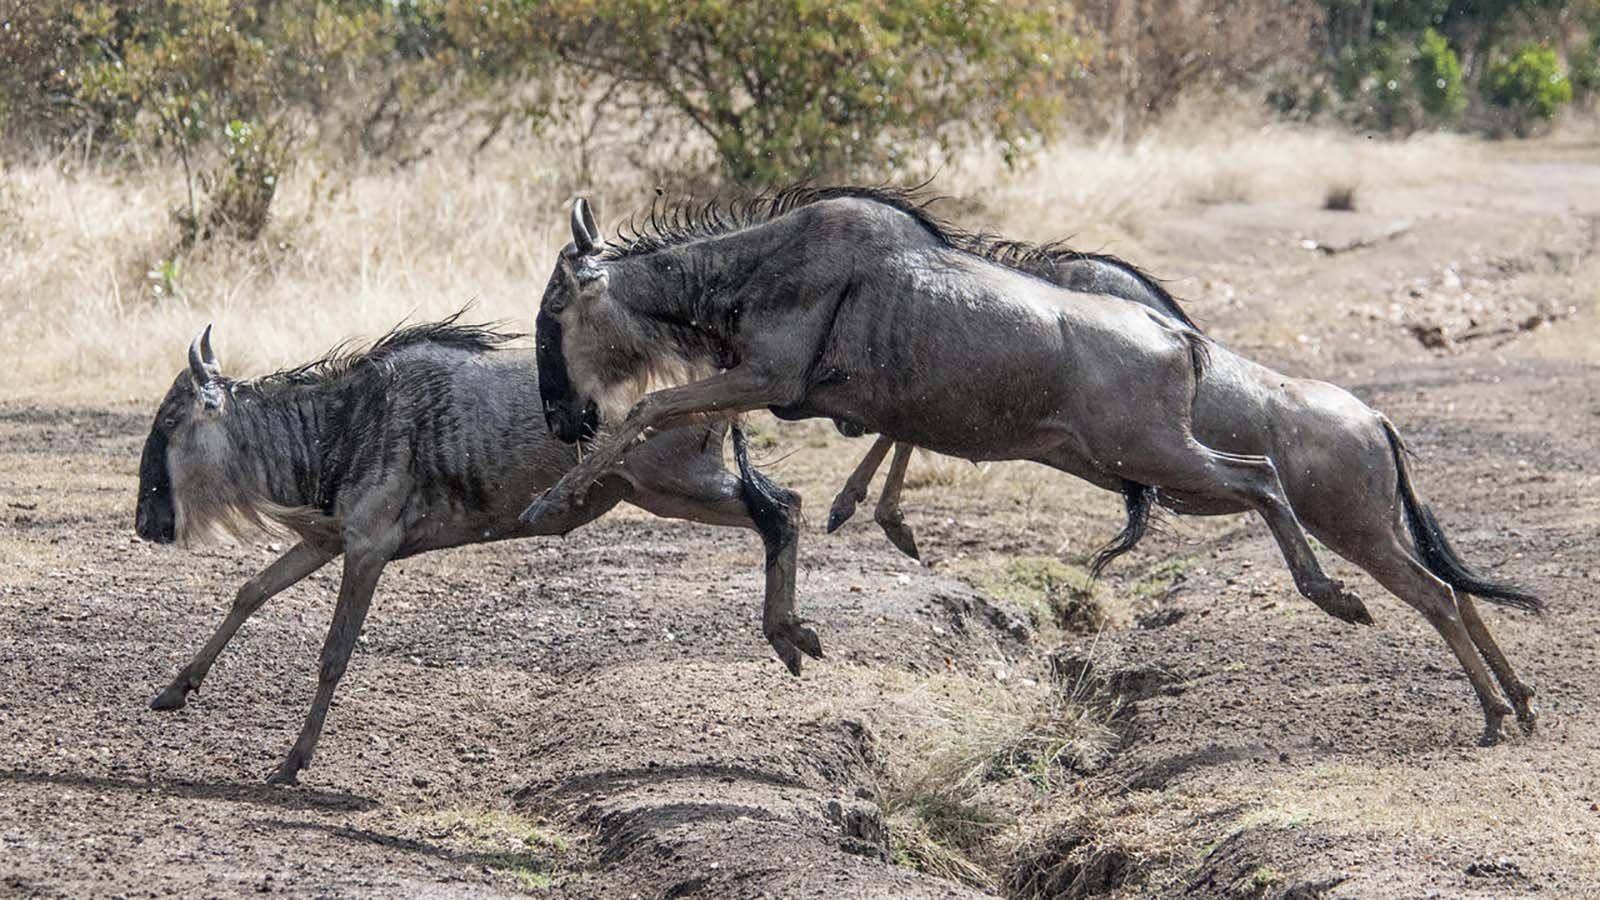 Wildebeest migrating in Serengeti National Park, Tanzania - Acacia migration camp